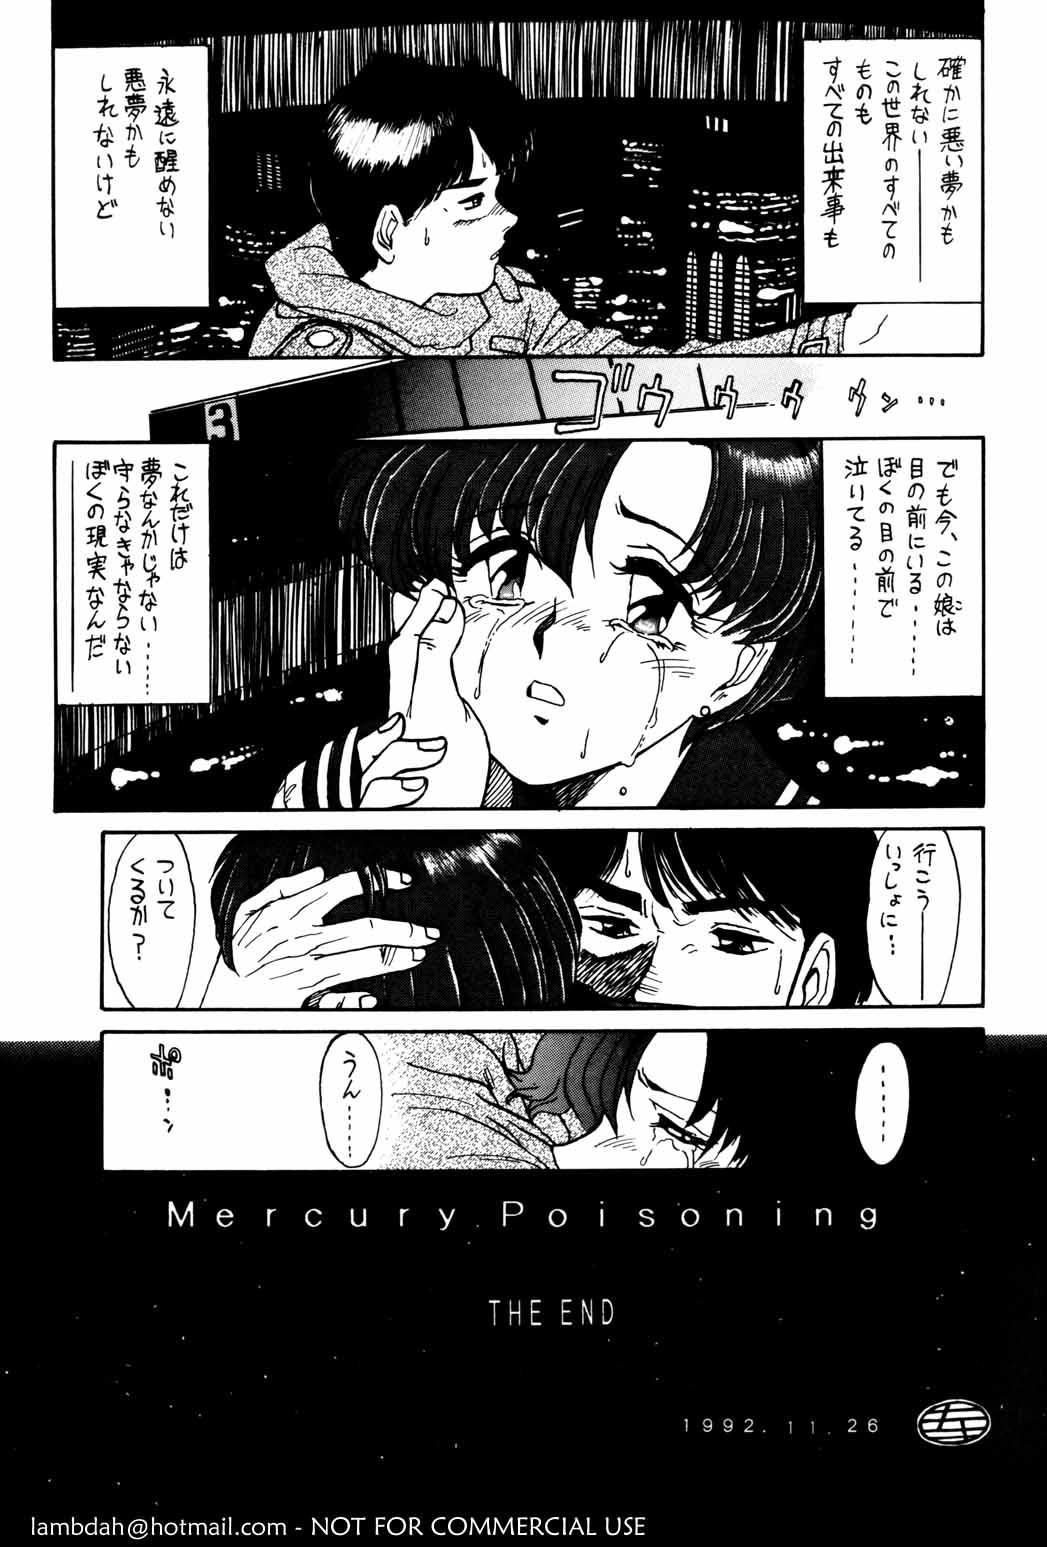 Mercury Poisoning 26